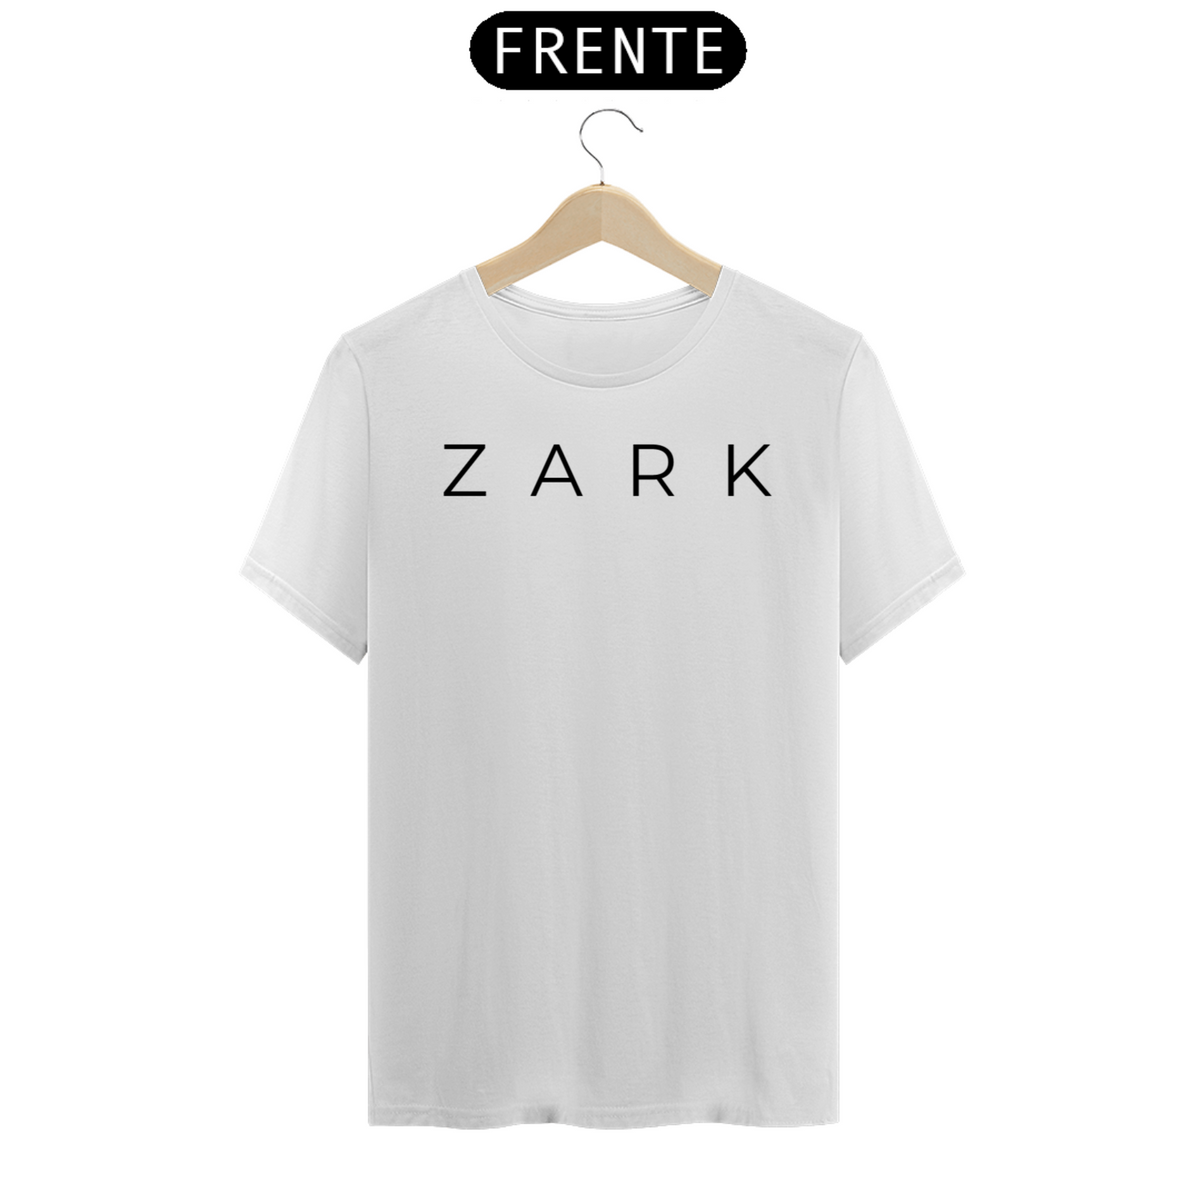 Nome do produto: T-Shirt Day One Zark (Escrita Preta)